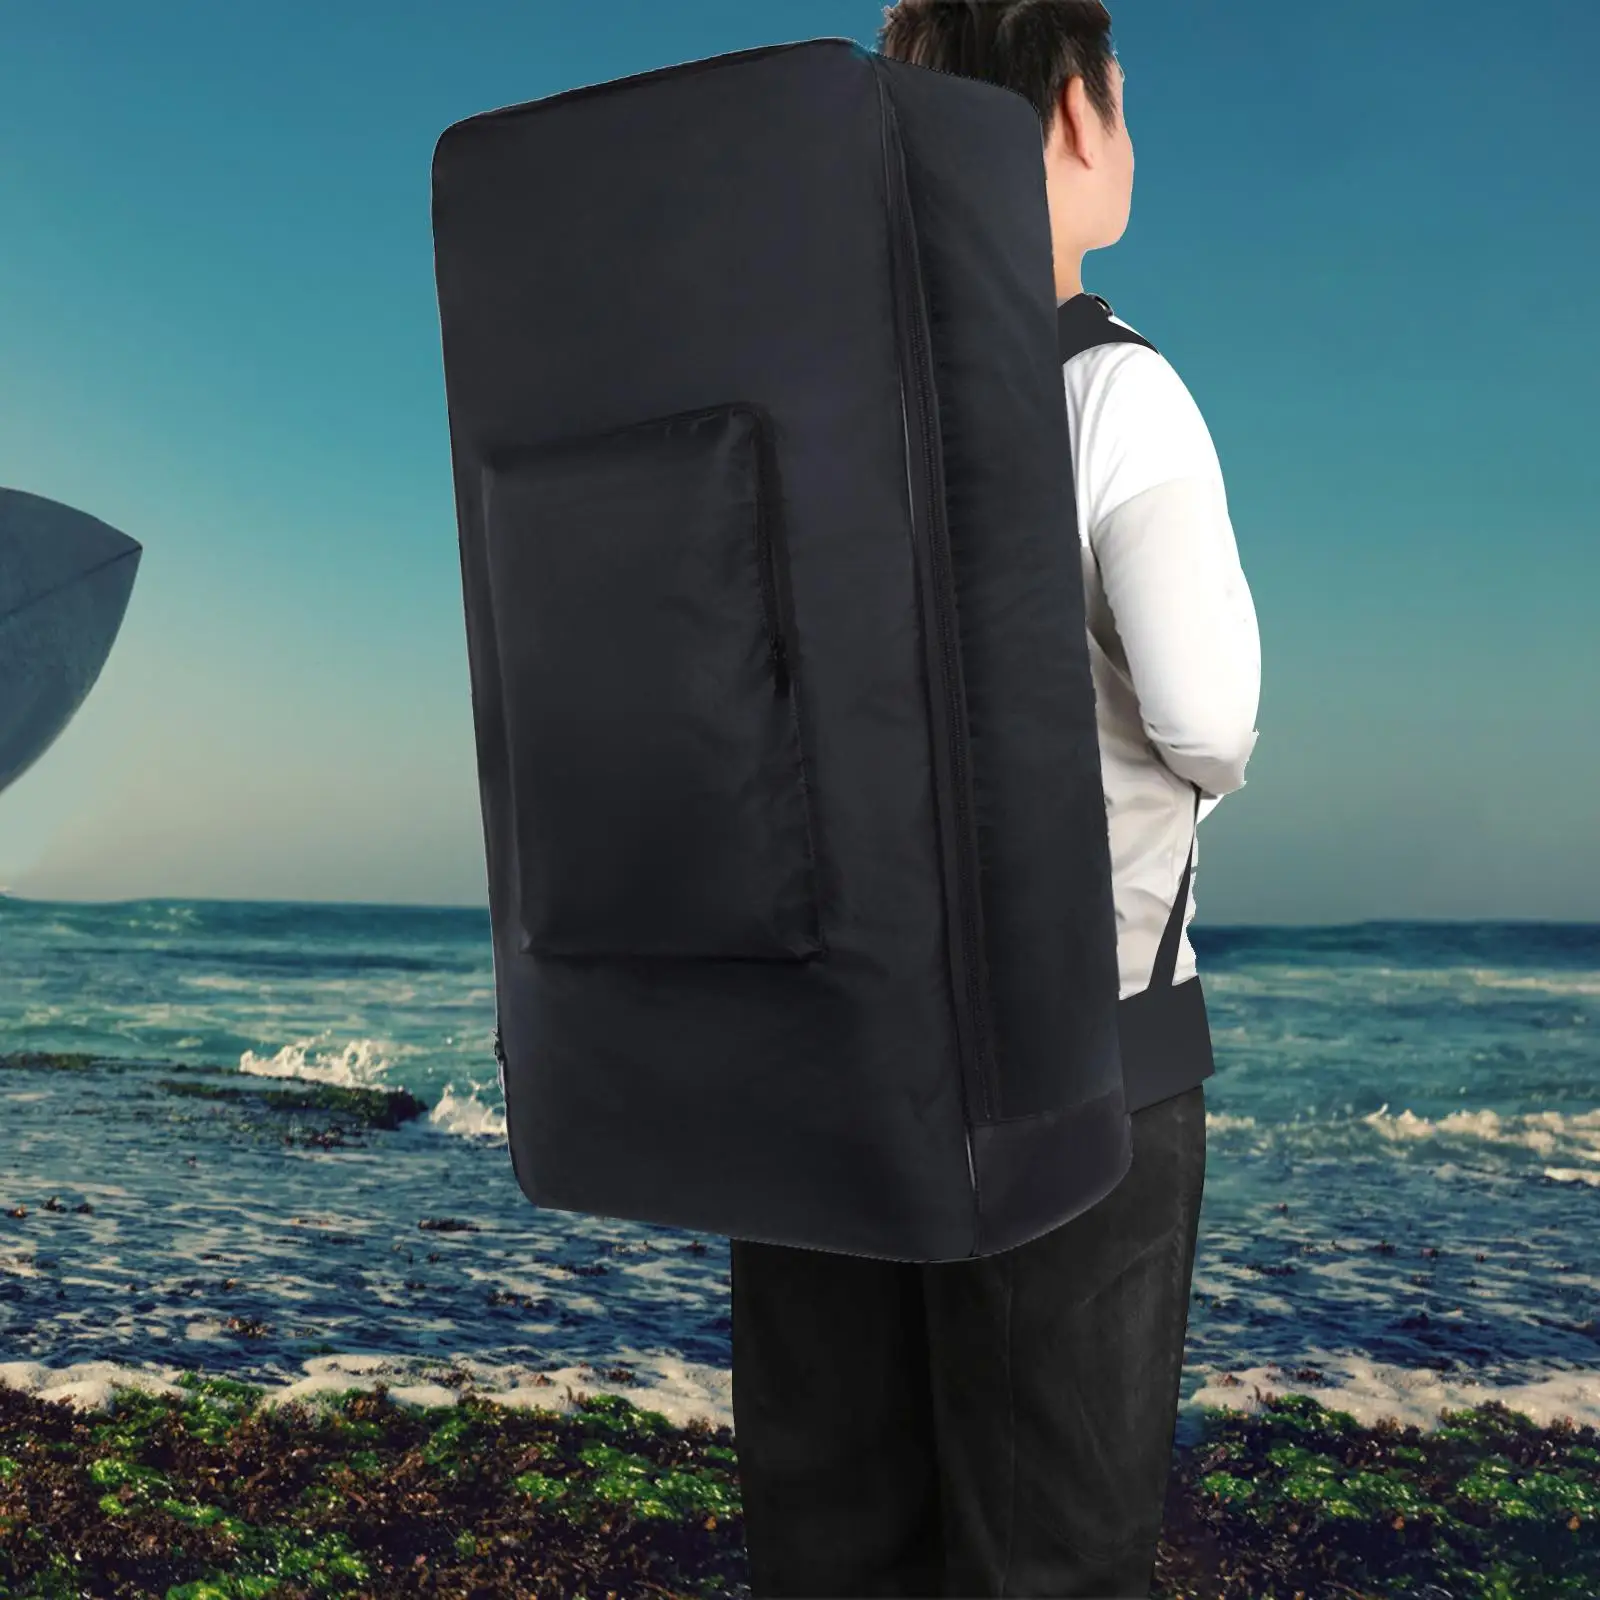 Universal Surfboard Bag Paddle Board Bag Large Capacity Storage Adjustable